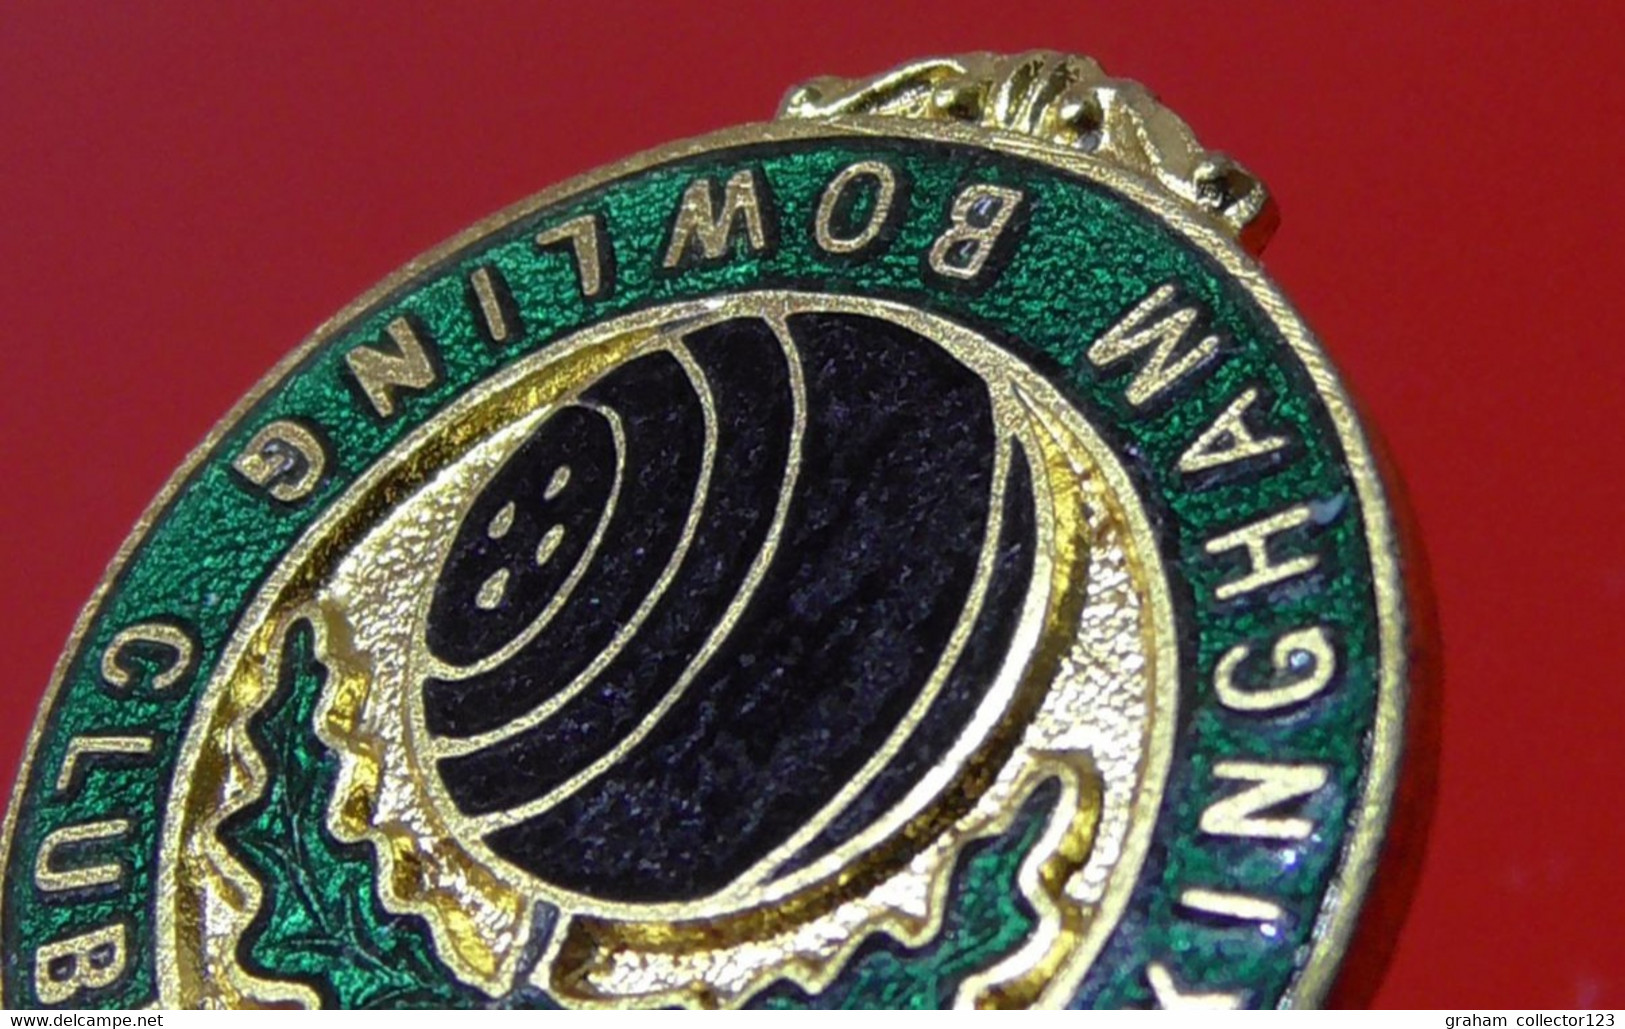 Vintage Enamel and Metal Badge Bowling Bowler Bowls Lawn Bowls Wokingham Bowling Club HW Miller